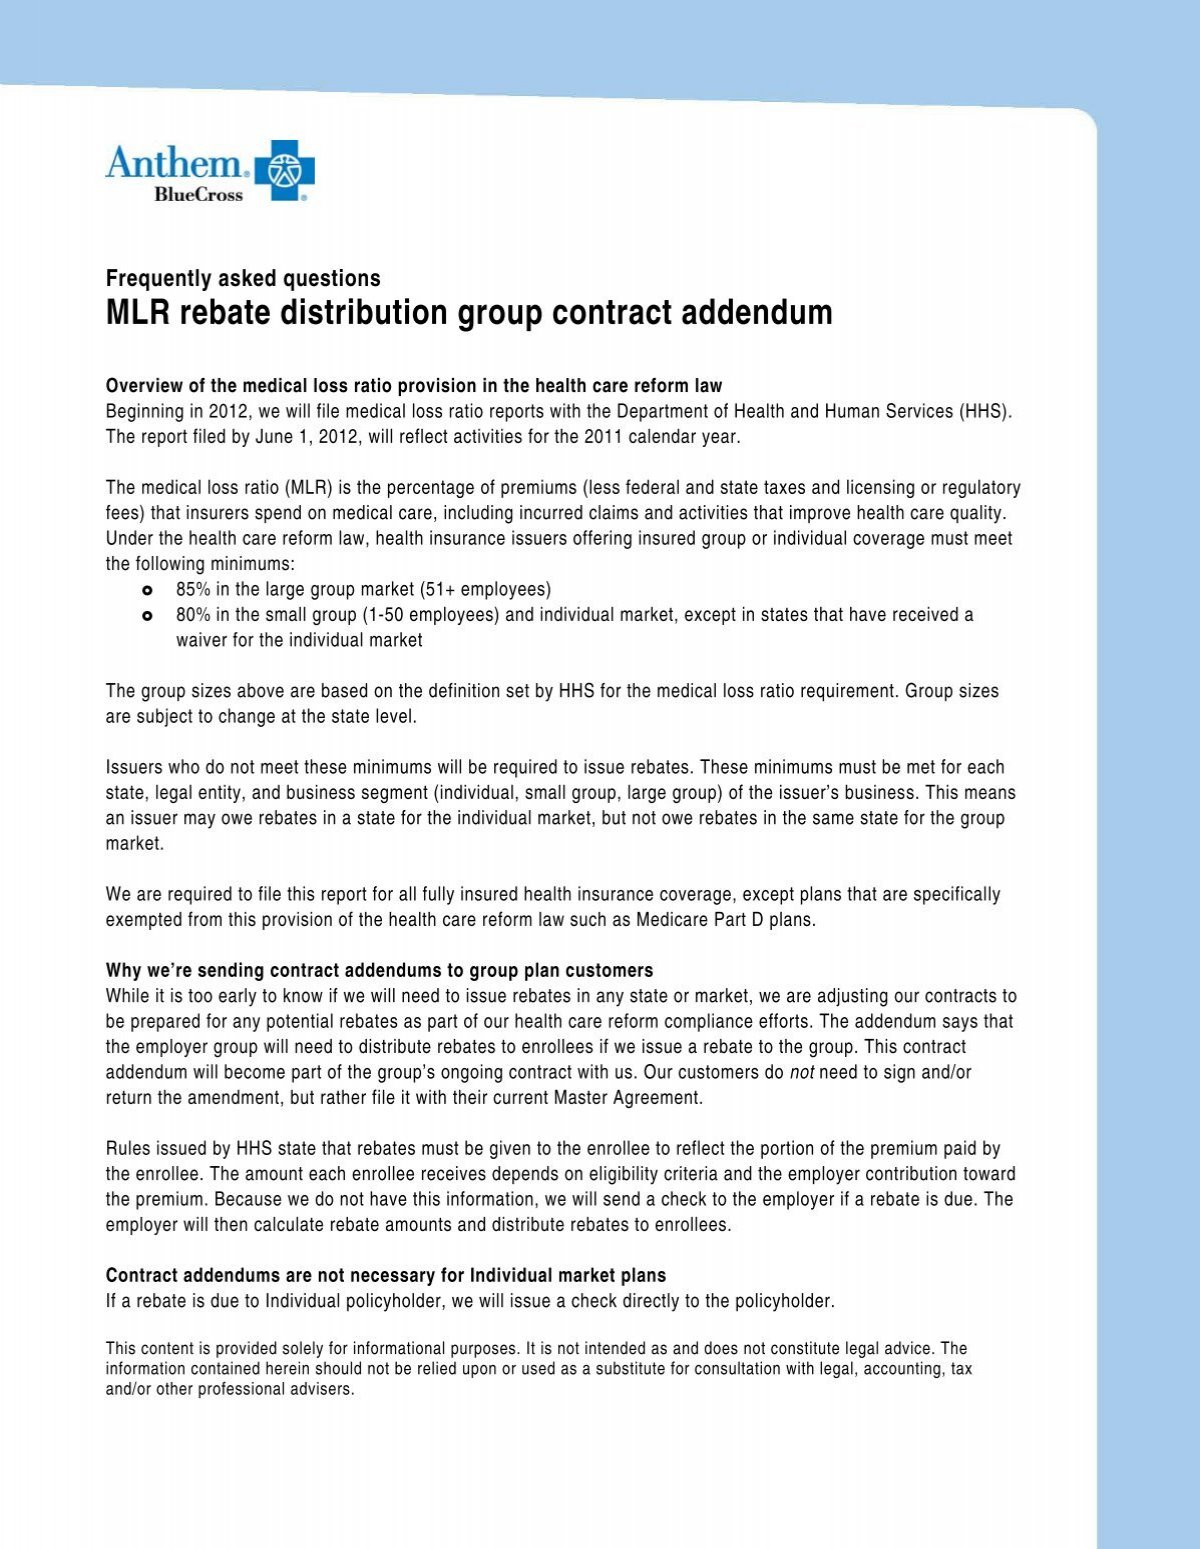 MLR Rebate Distribution Group Contract Addendum Health Benefits 